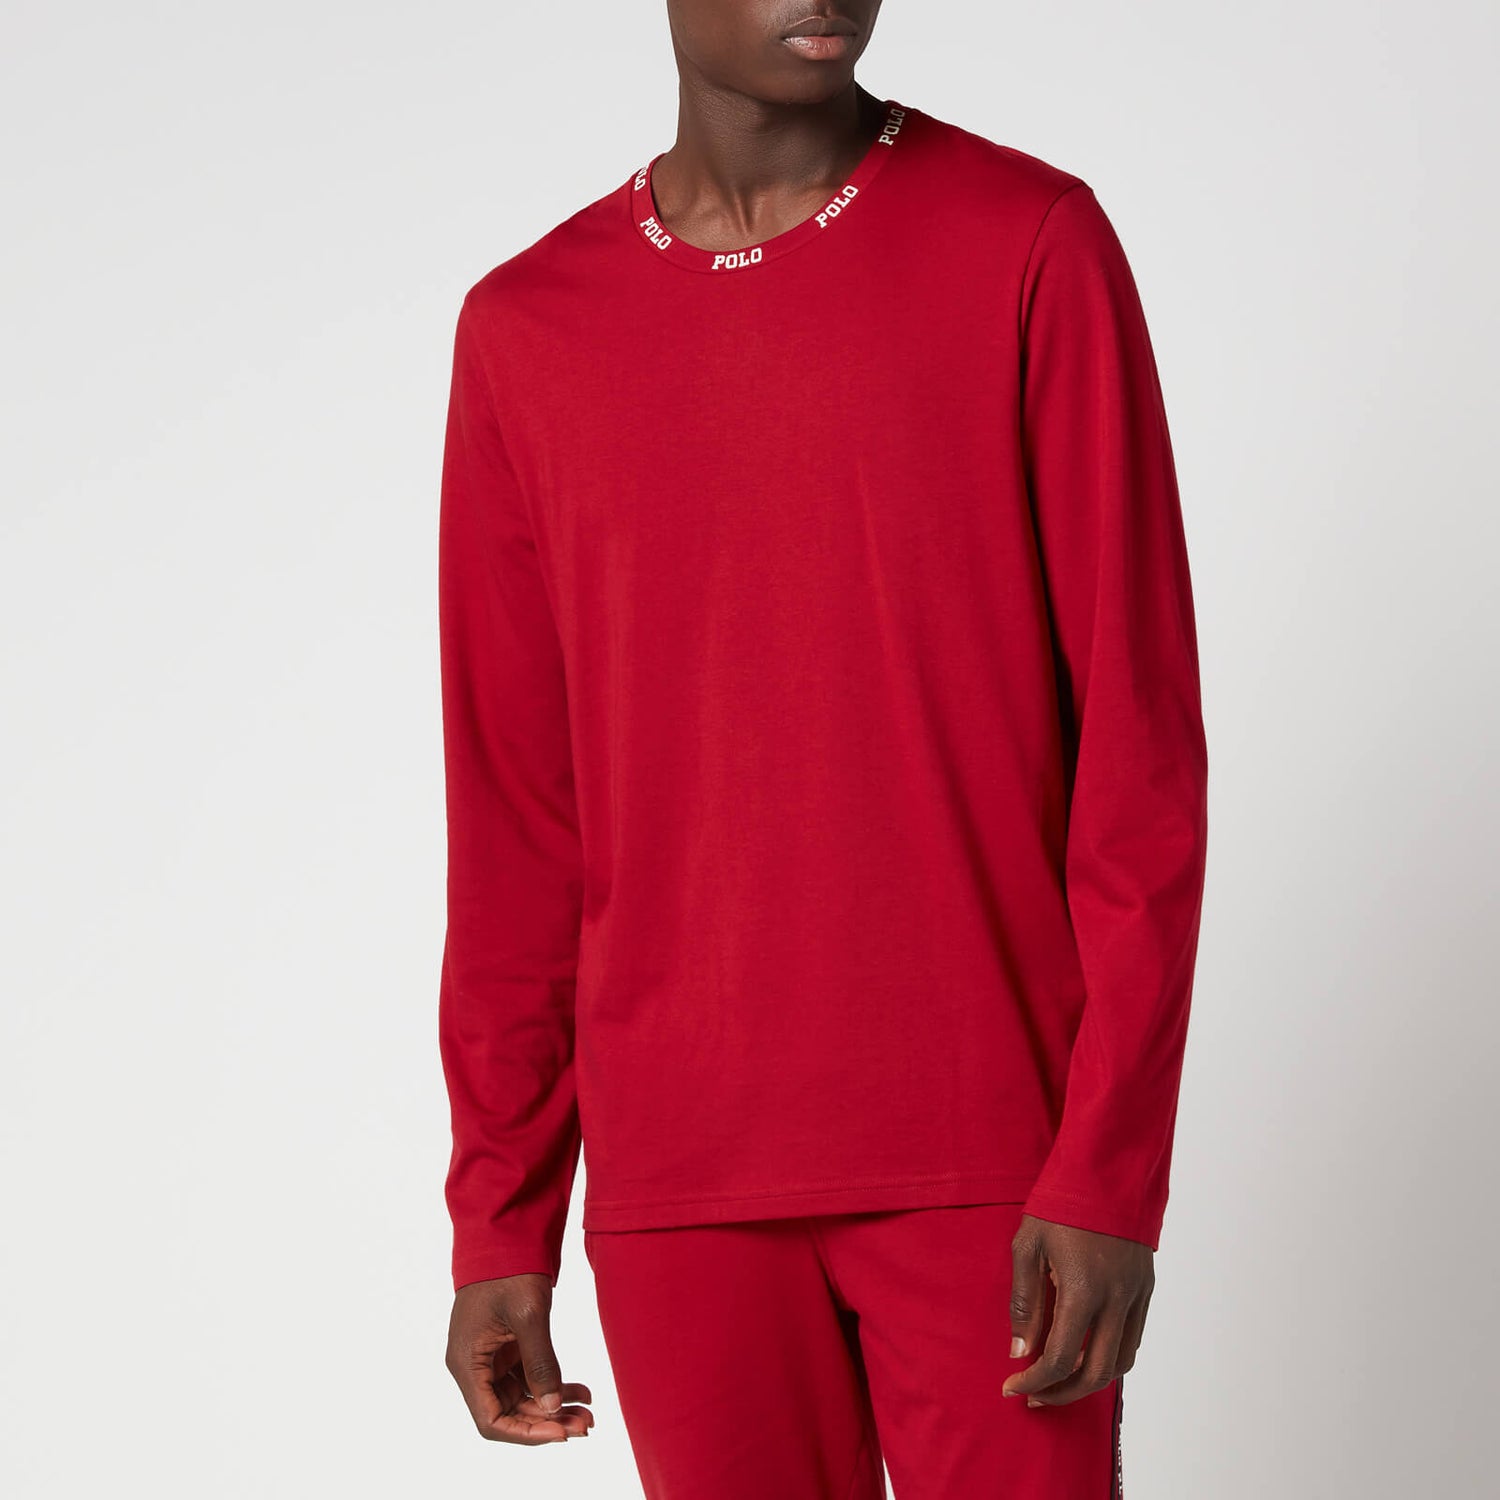 Polo Ralph Lauren Men's Liquid Cotton Long Sleeve Top - Eaton Red